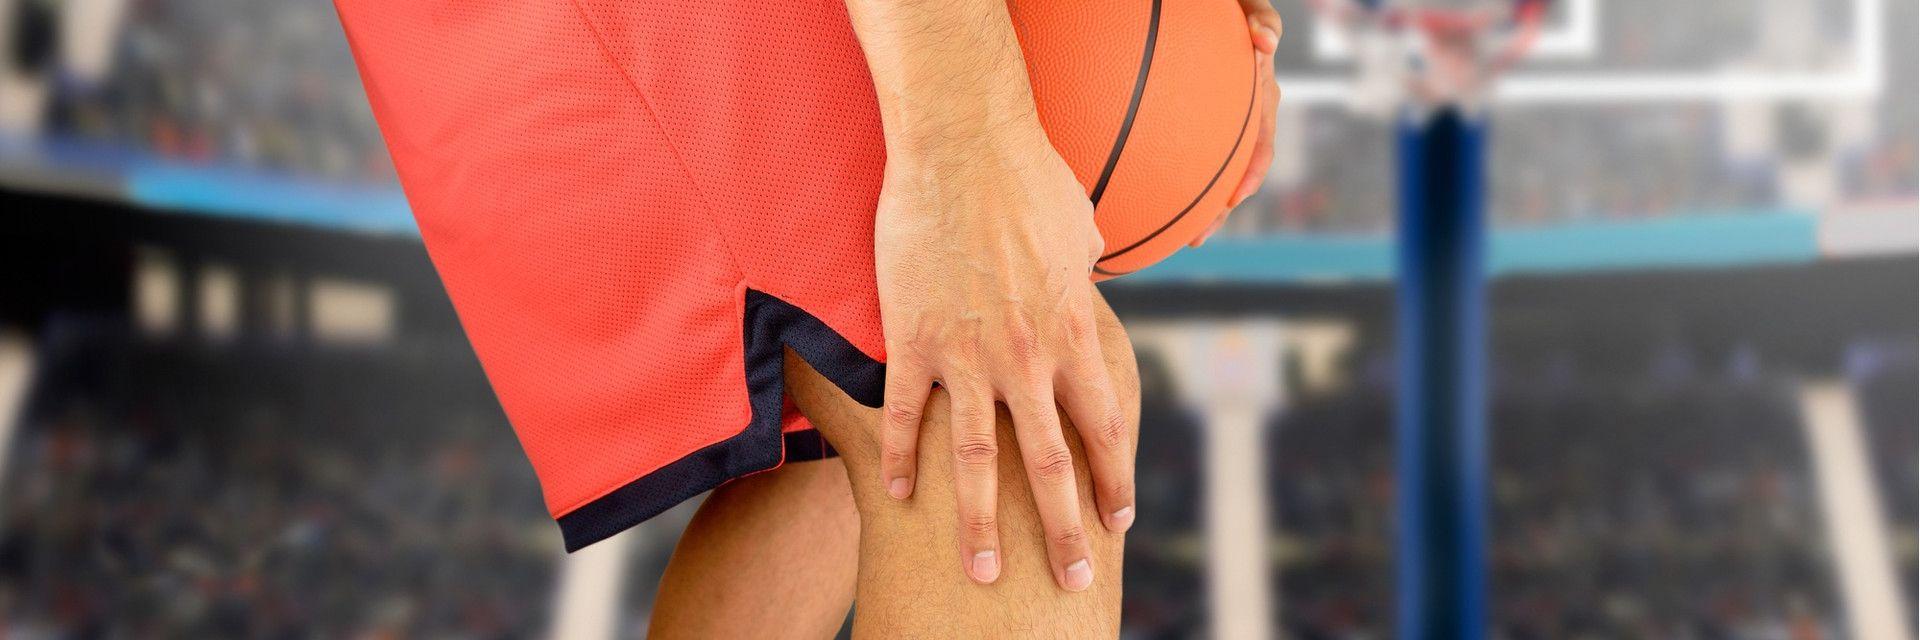 Common-Basketball-Injuries